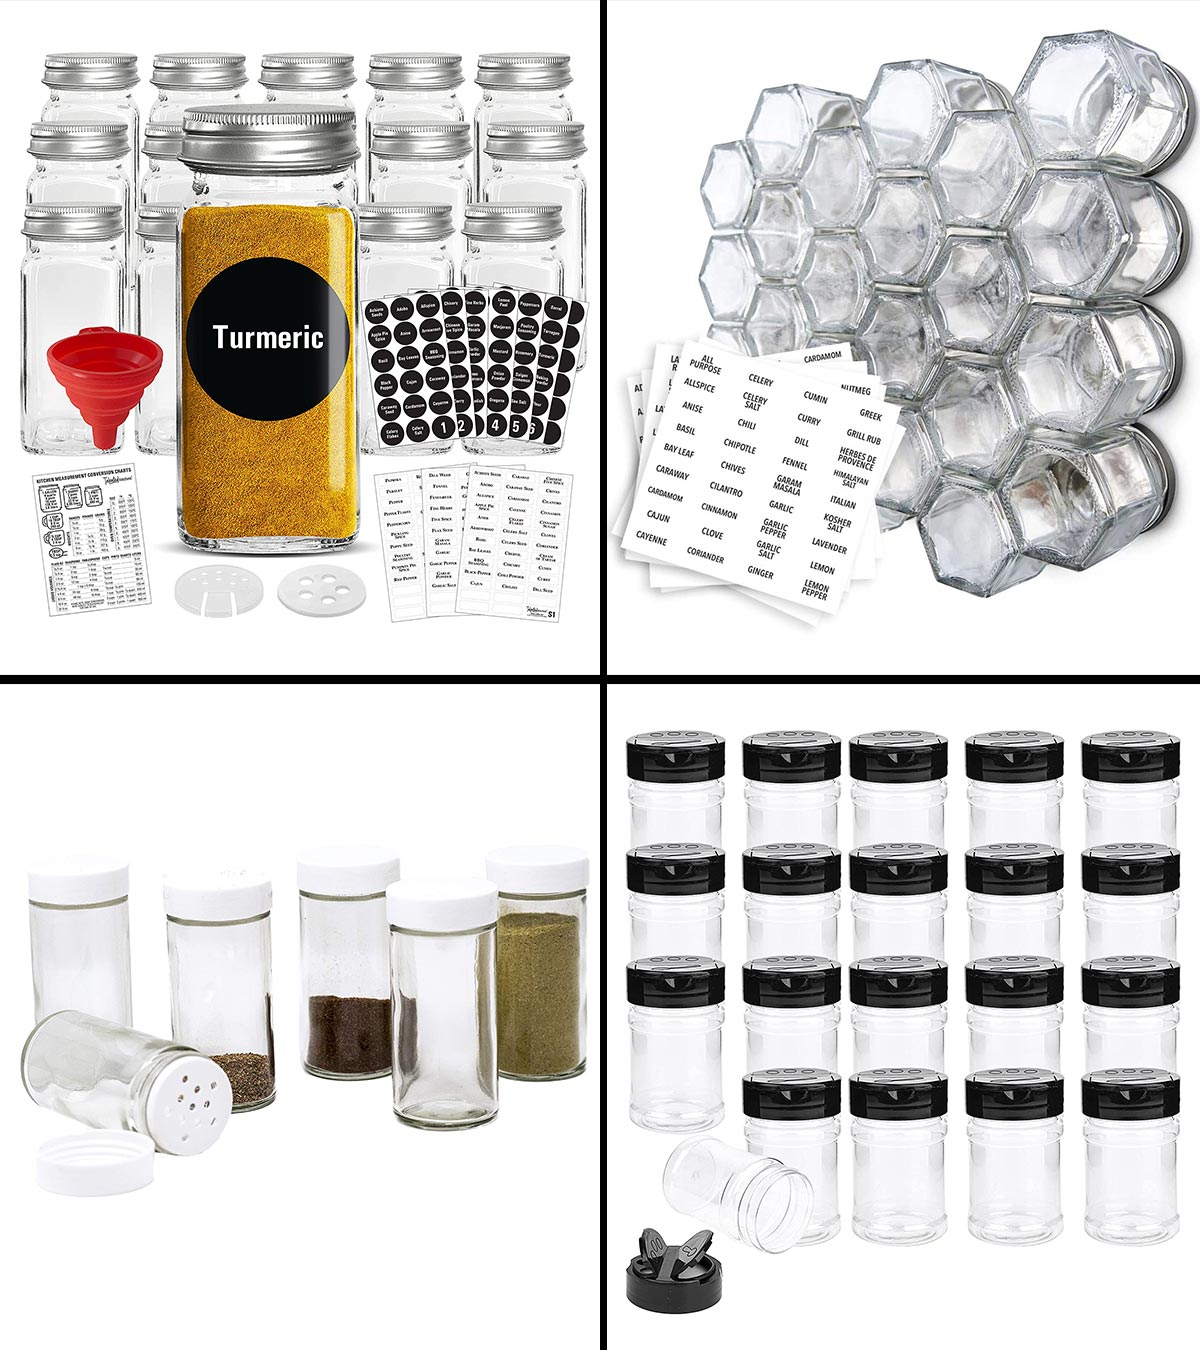 Aozita 24 Pcs Glass Mason Spice Jars/Bottles - 4oz Empty Spice